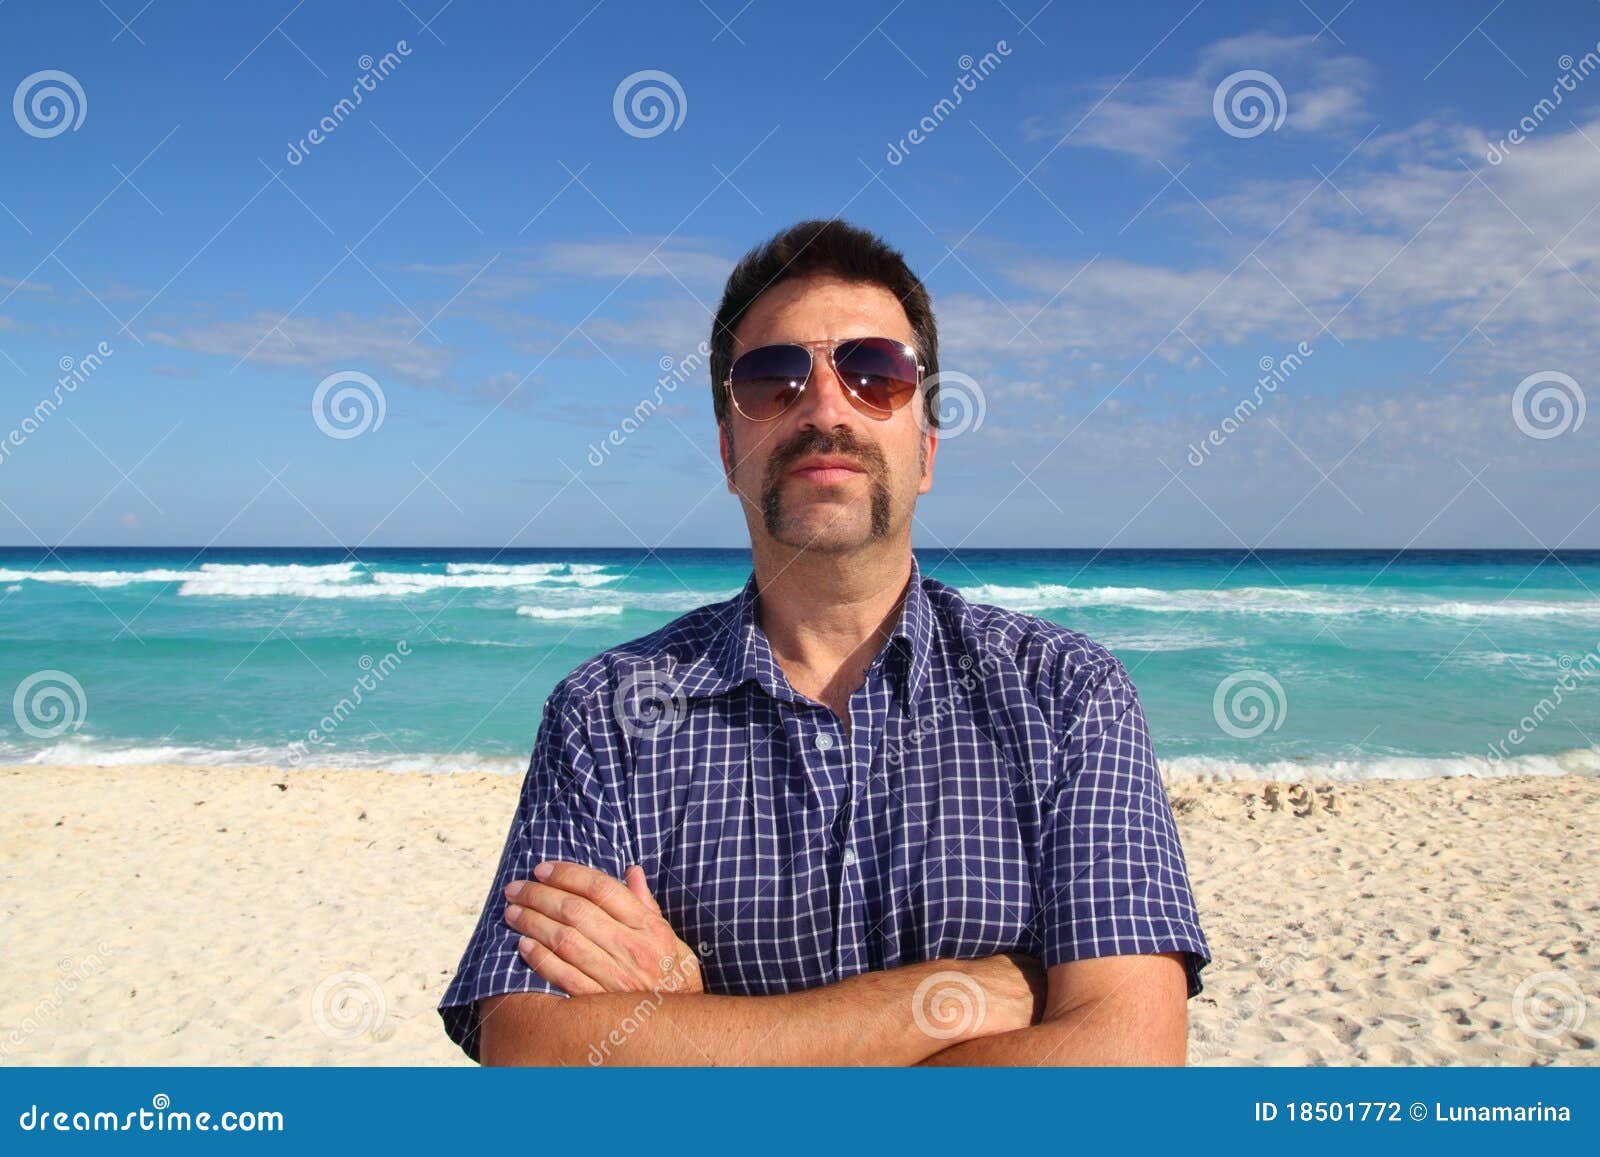 Nerd Tourist Mustache On Caribbean Beach Stock Photography - Image ...